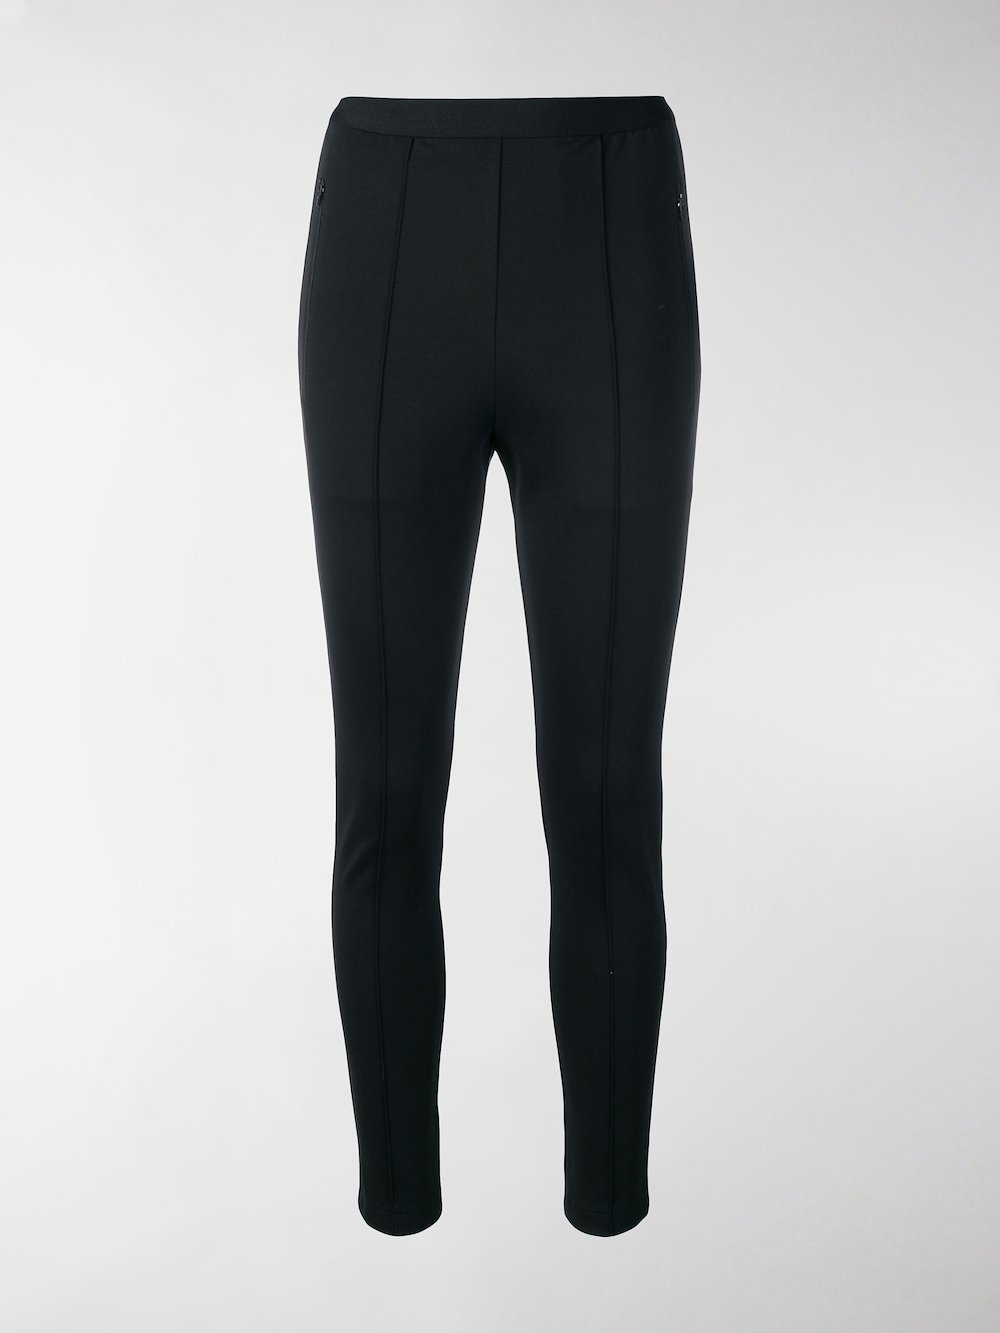 Balenciaga black polyamide and elastane leggings for women 173100